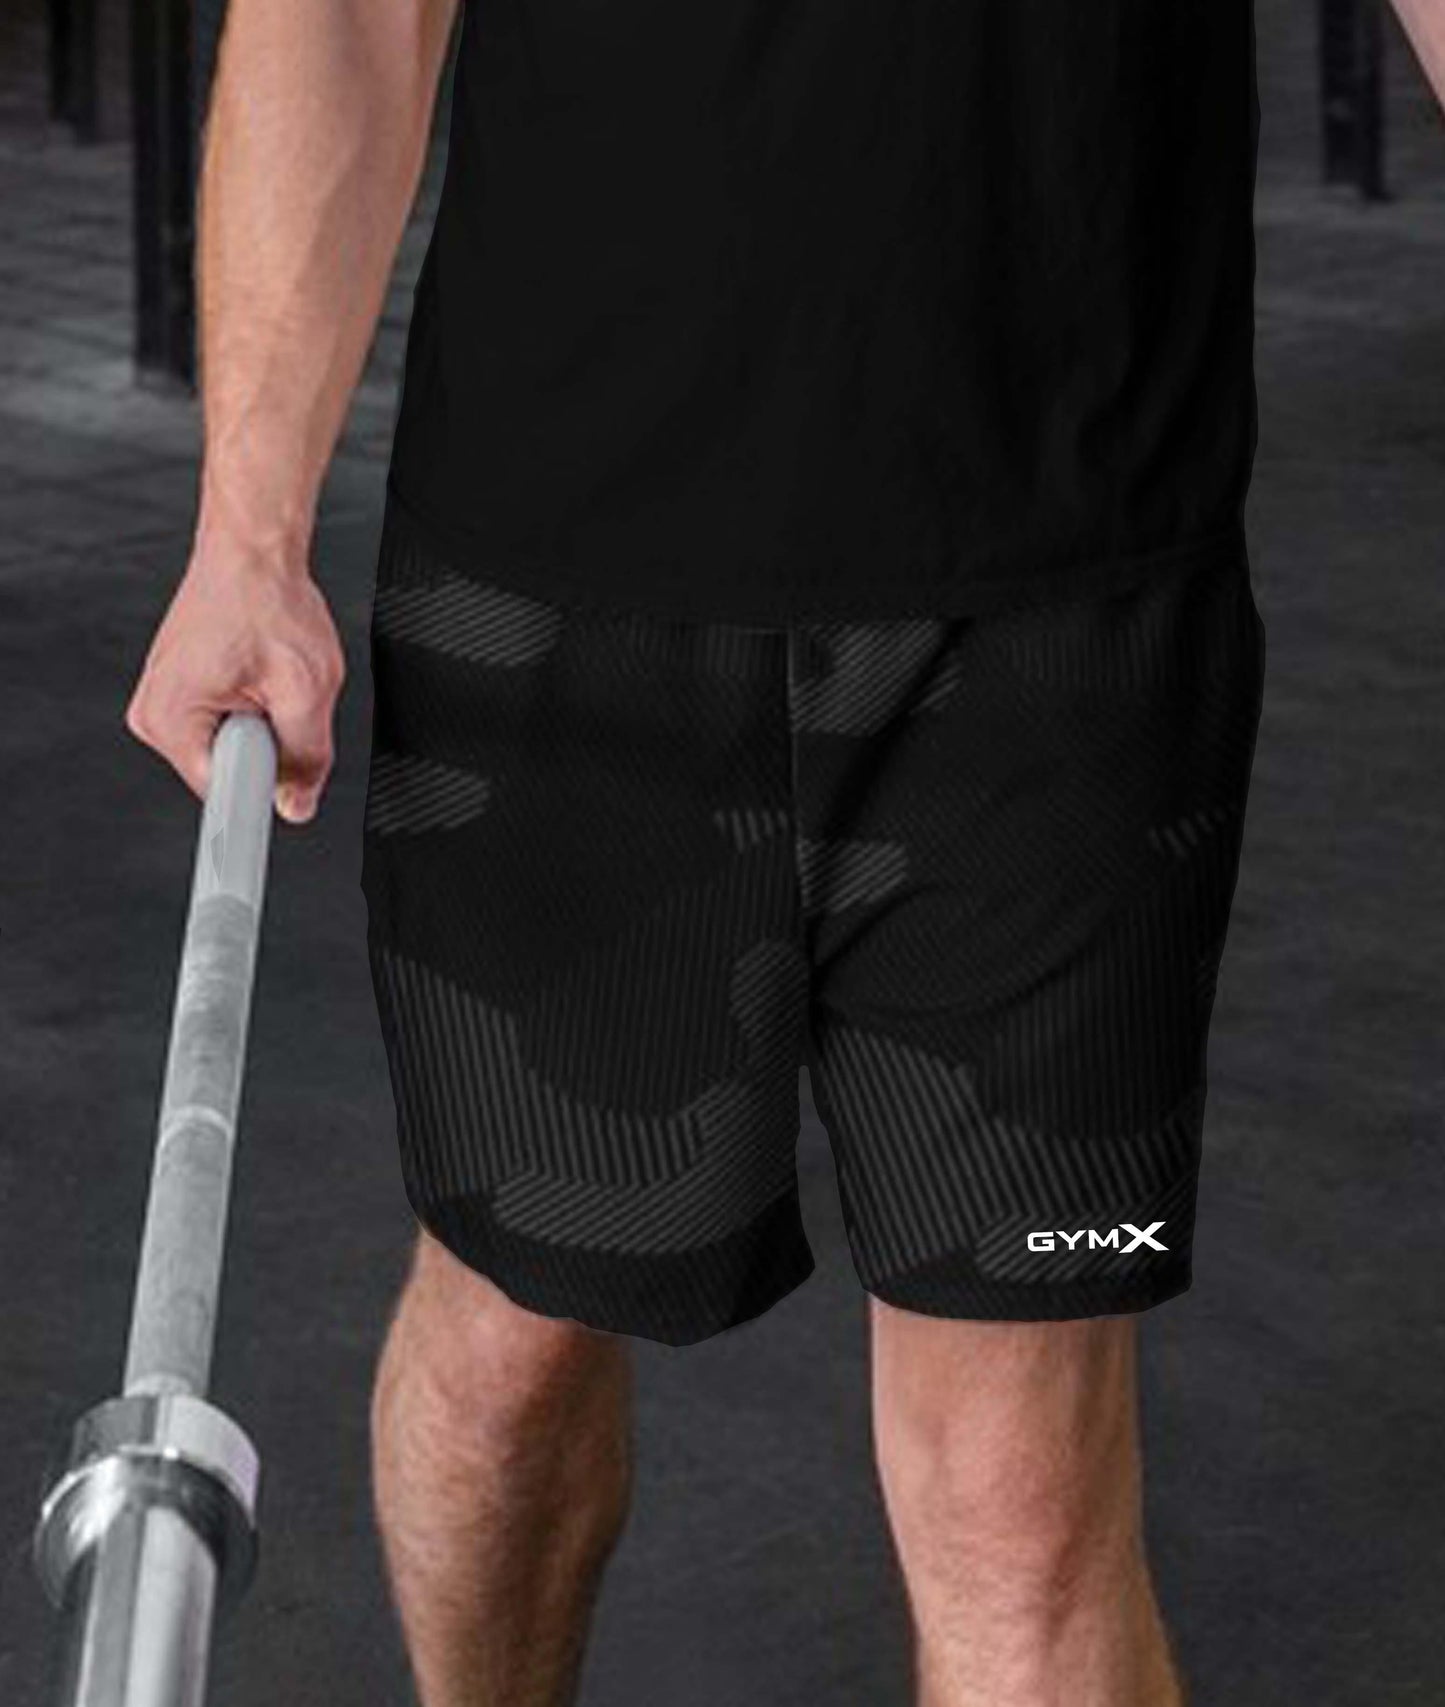 Vitality GymX Shorts: Oblivion Black Camo